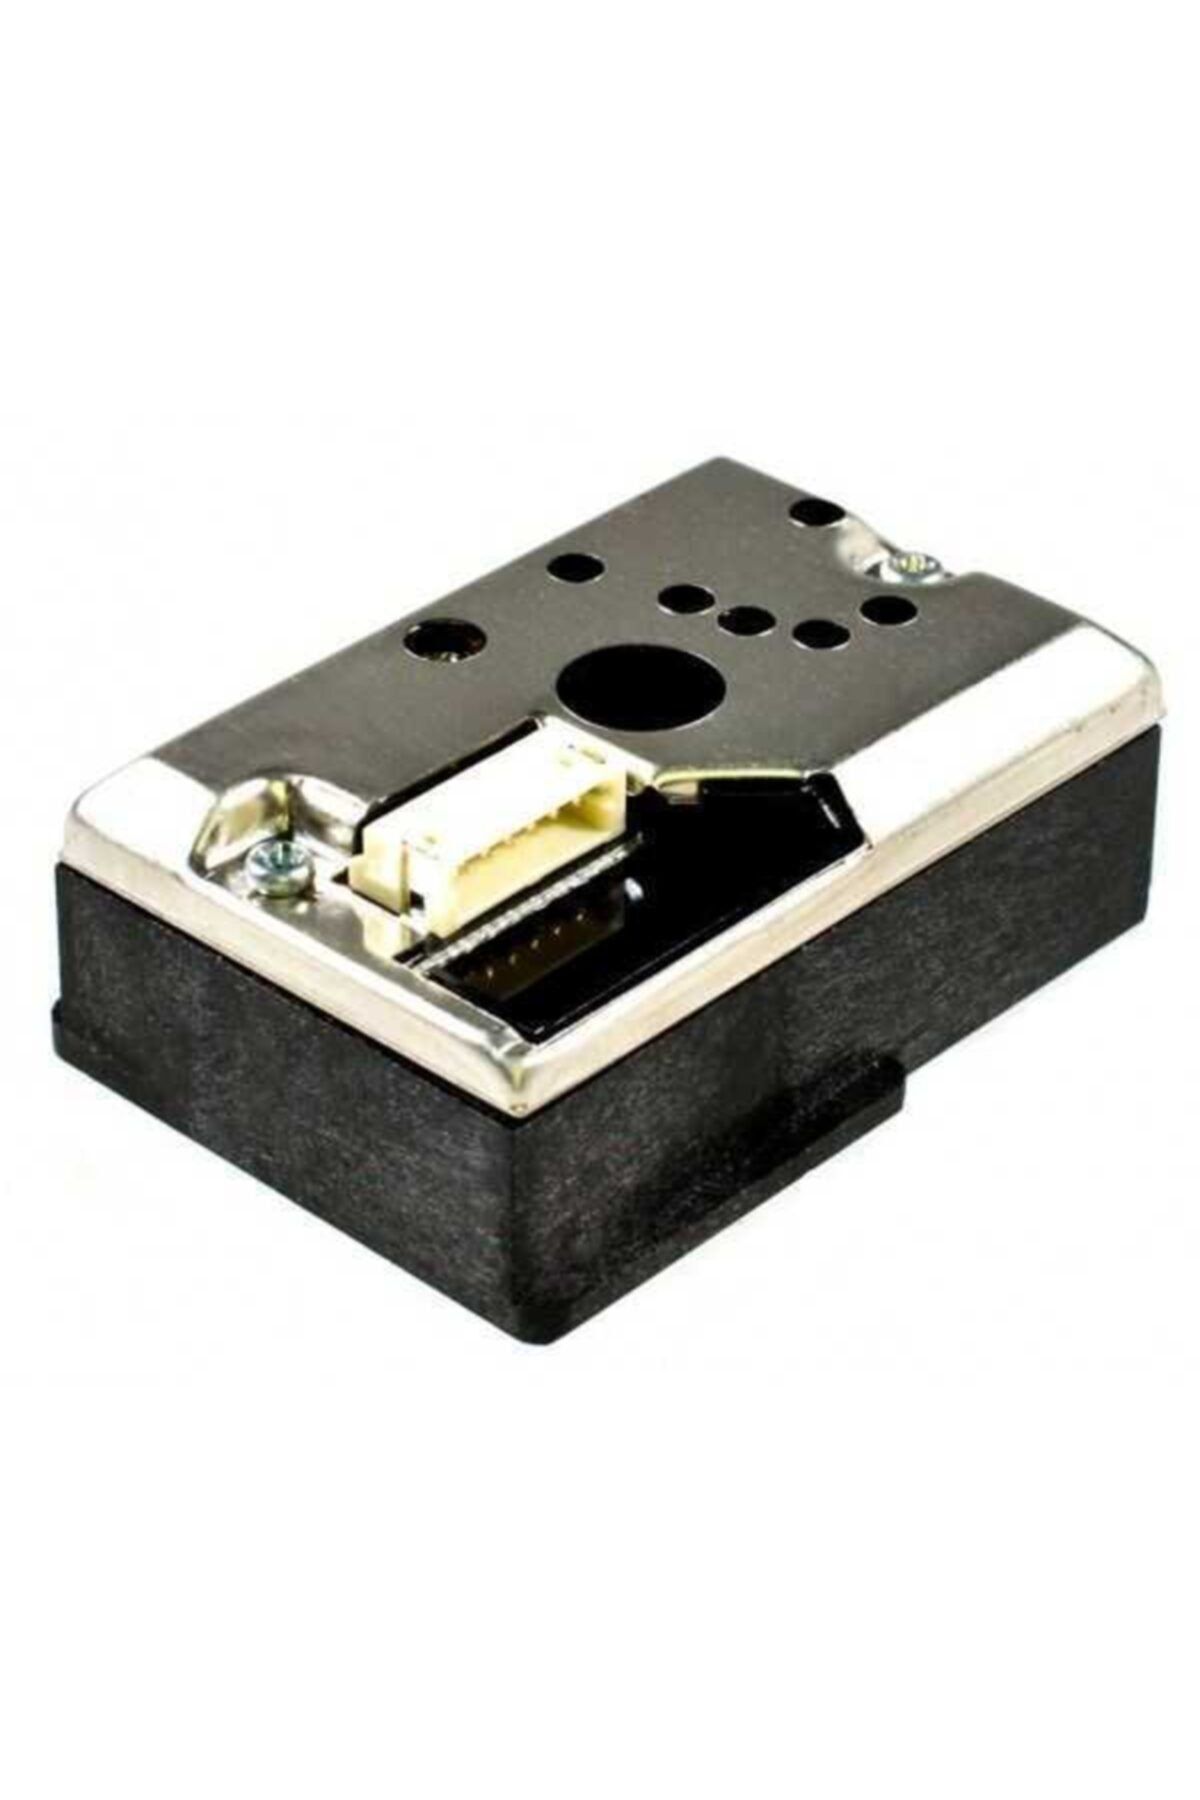 Sharp Gp2y10 Optik Toz Sensörü - Dust Sensor